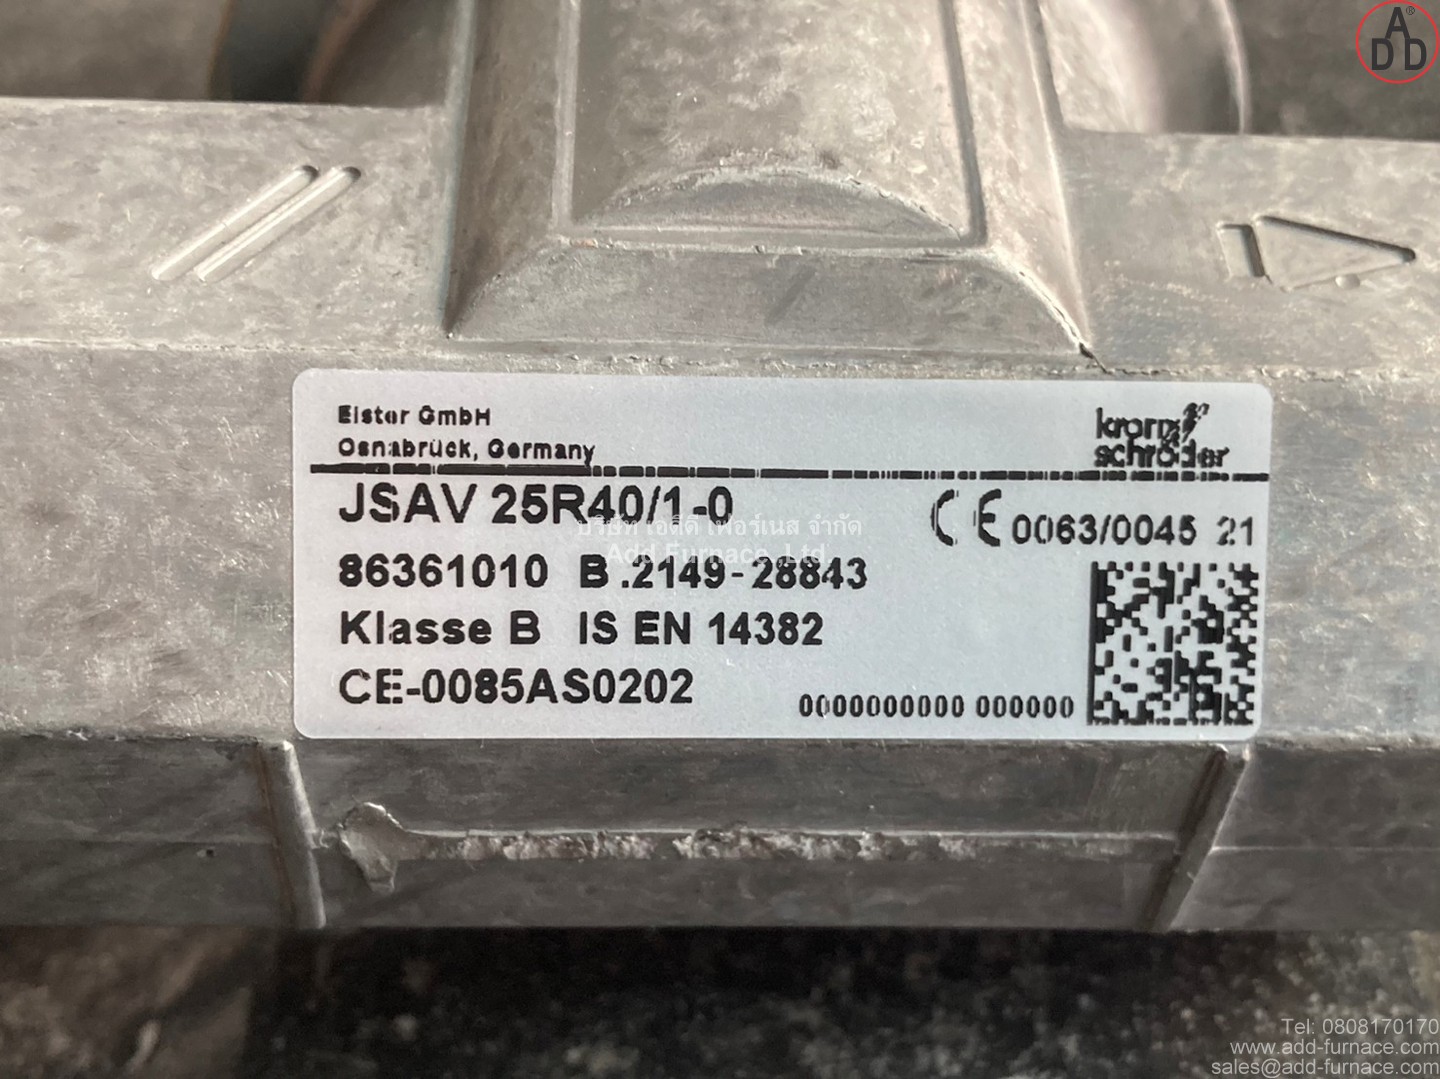 JSAV 25R40/1-0 with VGBF 25R40-1 (8)